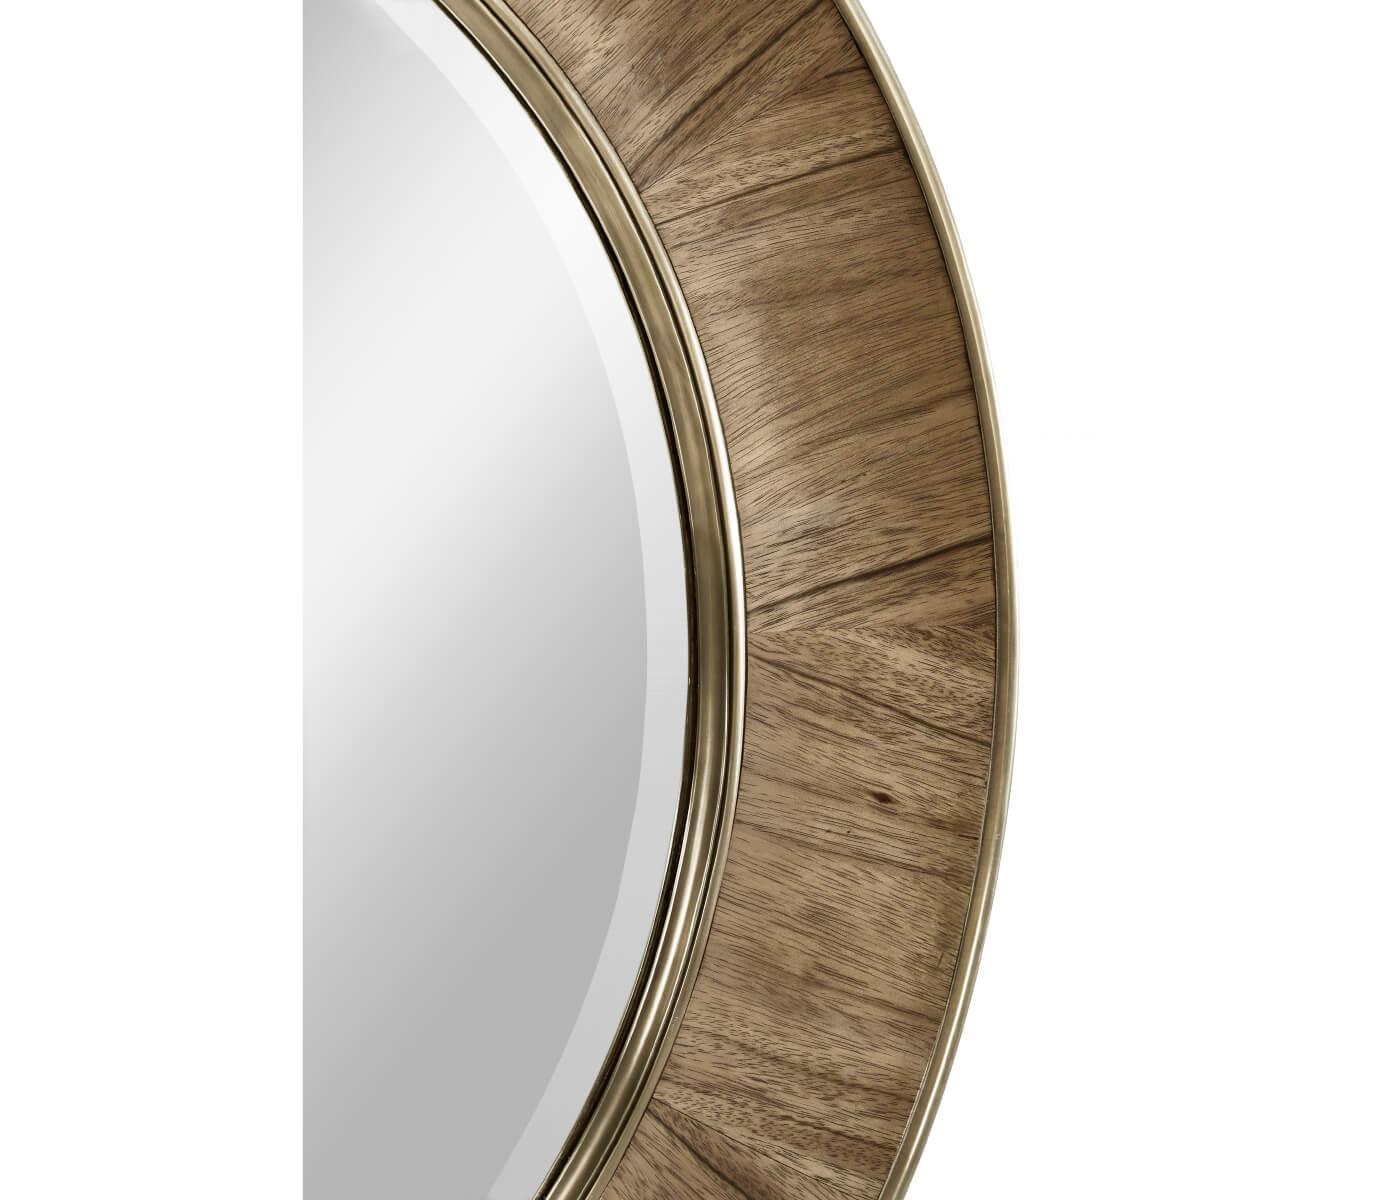 Jonathan Charles Golden Amber & Brass Round Wall Mirror - Small